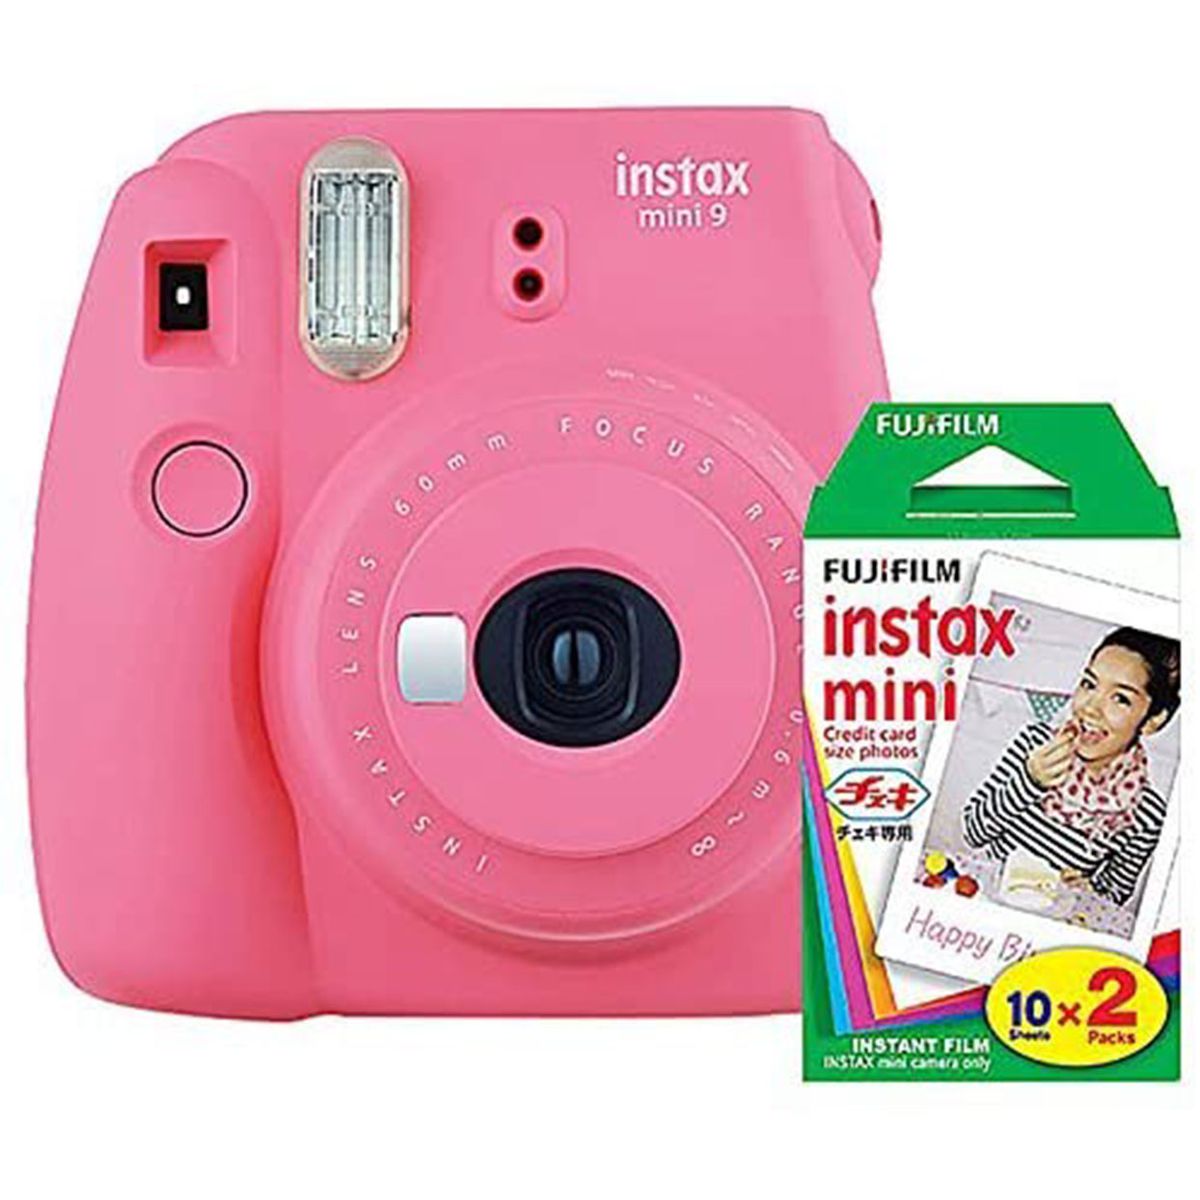 Fujifilm instax Mini 9 Instant Camera (Flamingo Pink) and instax Film Twin Pack